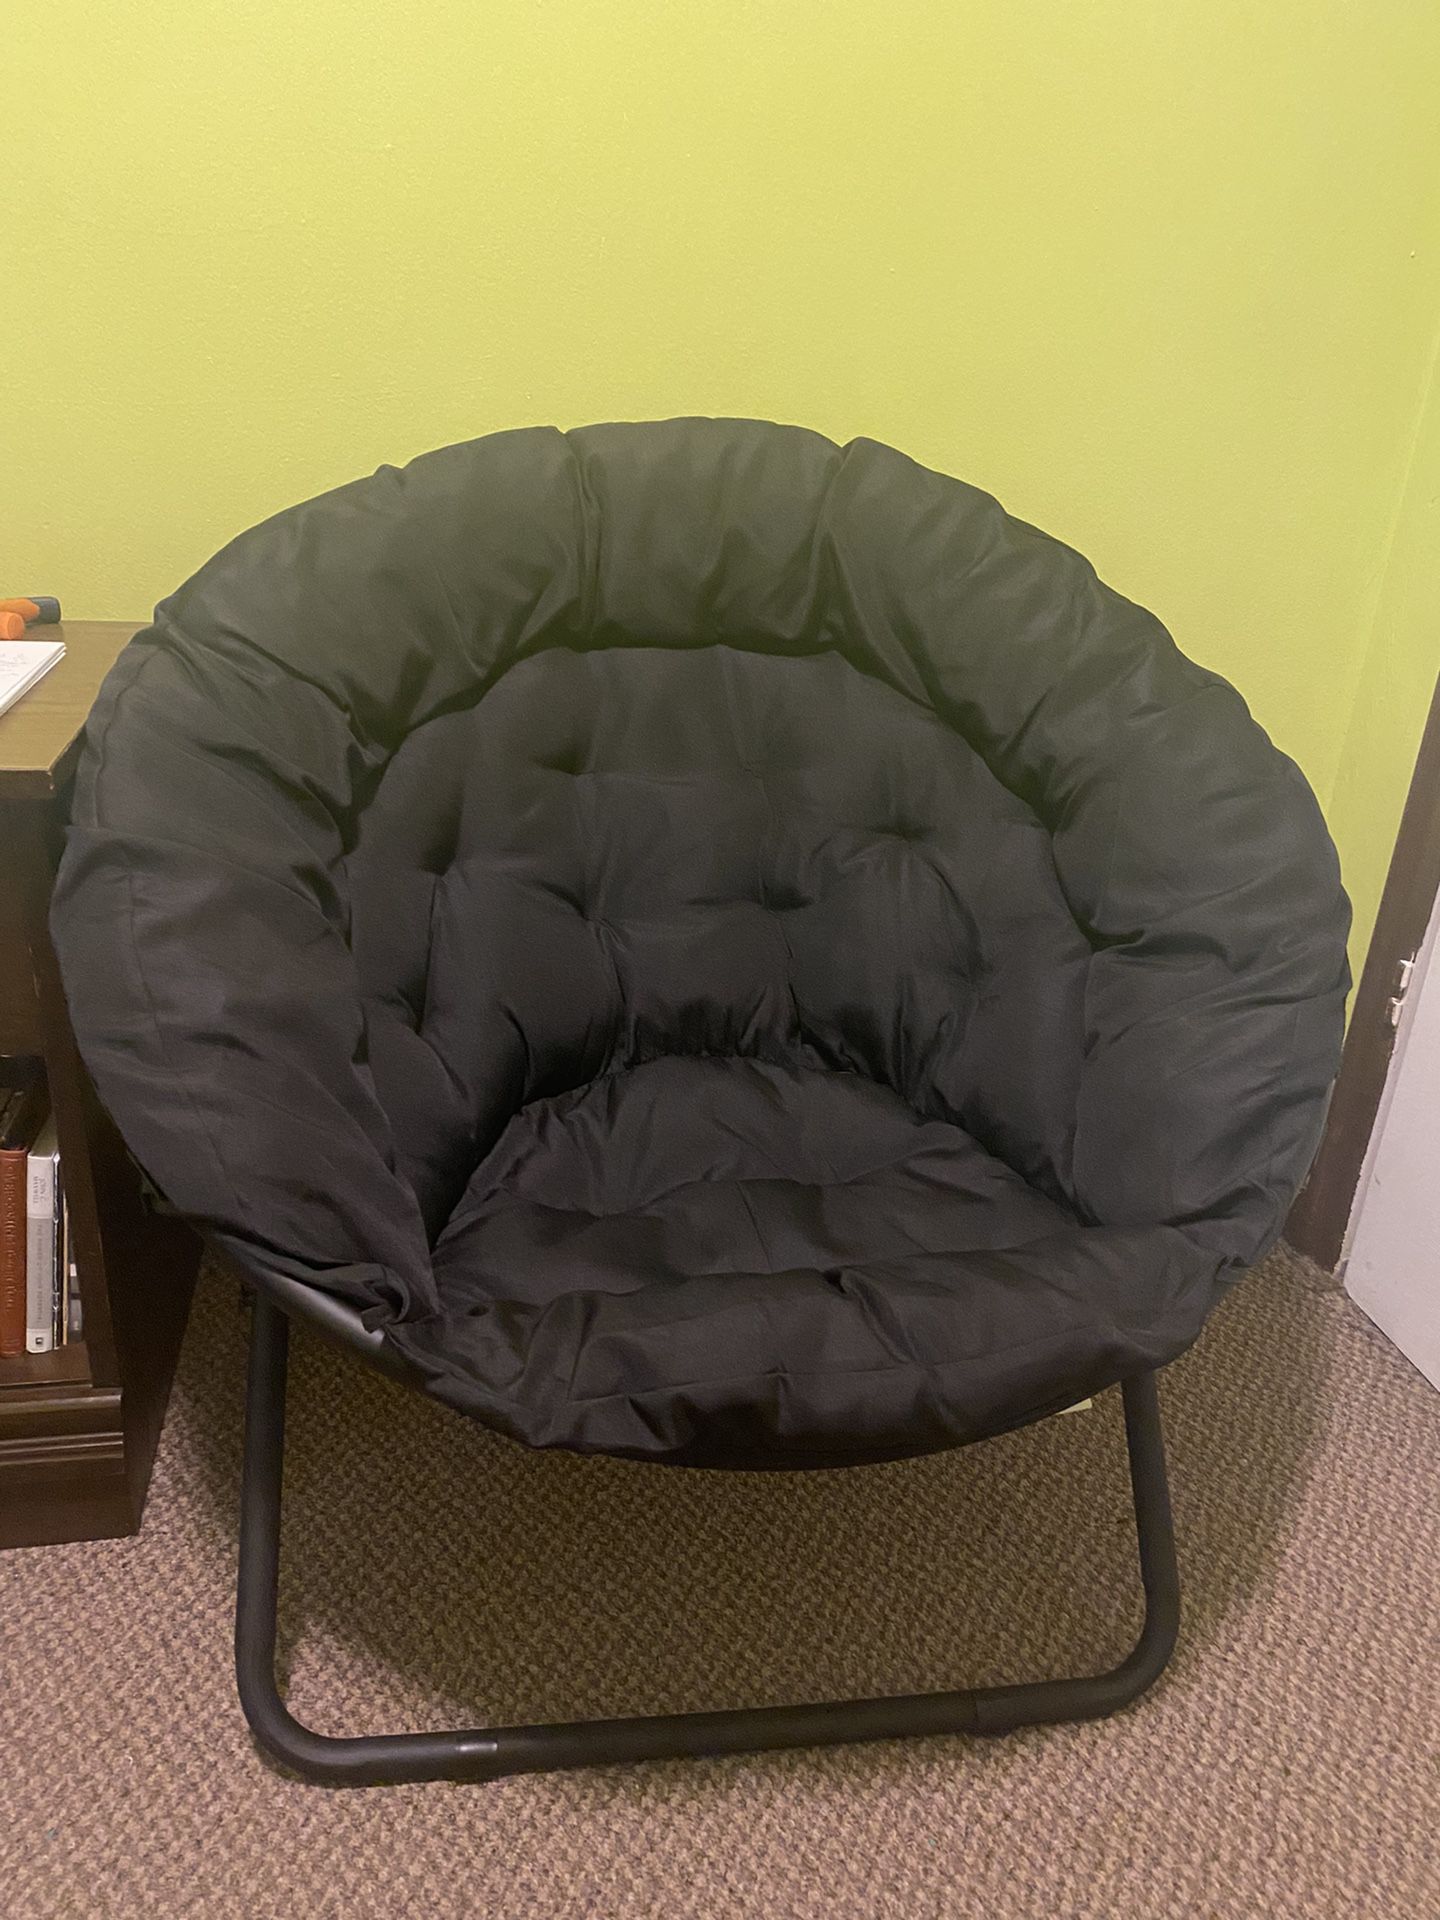 Black Saucer chair